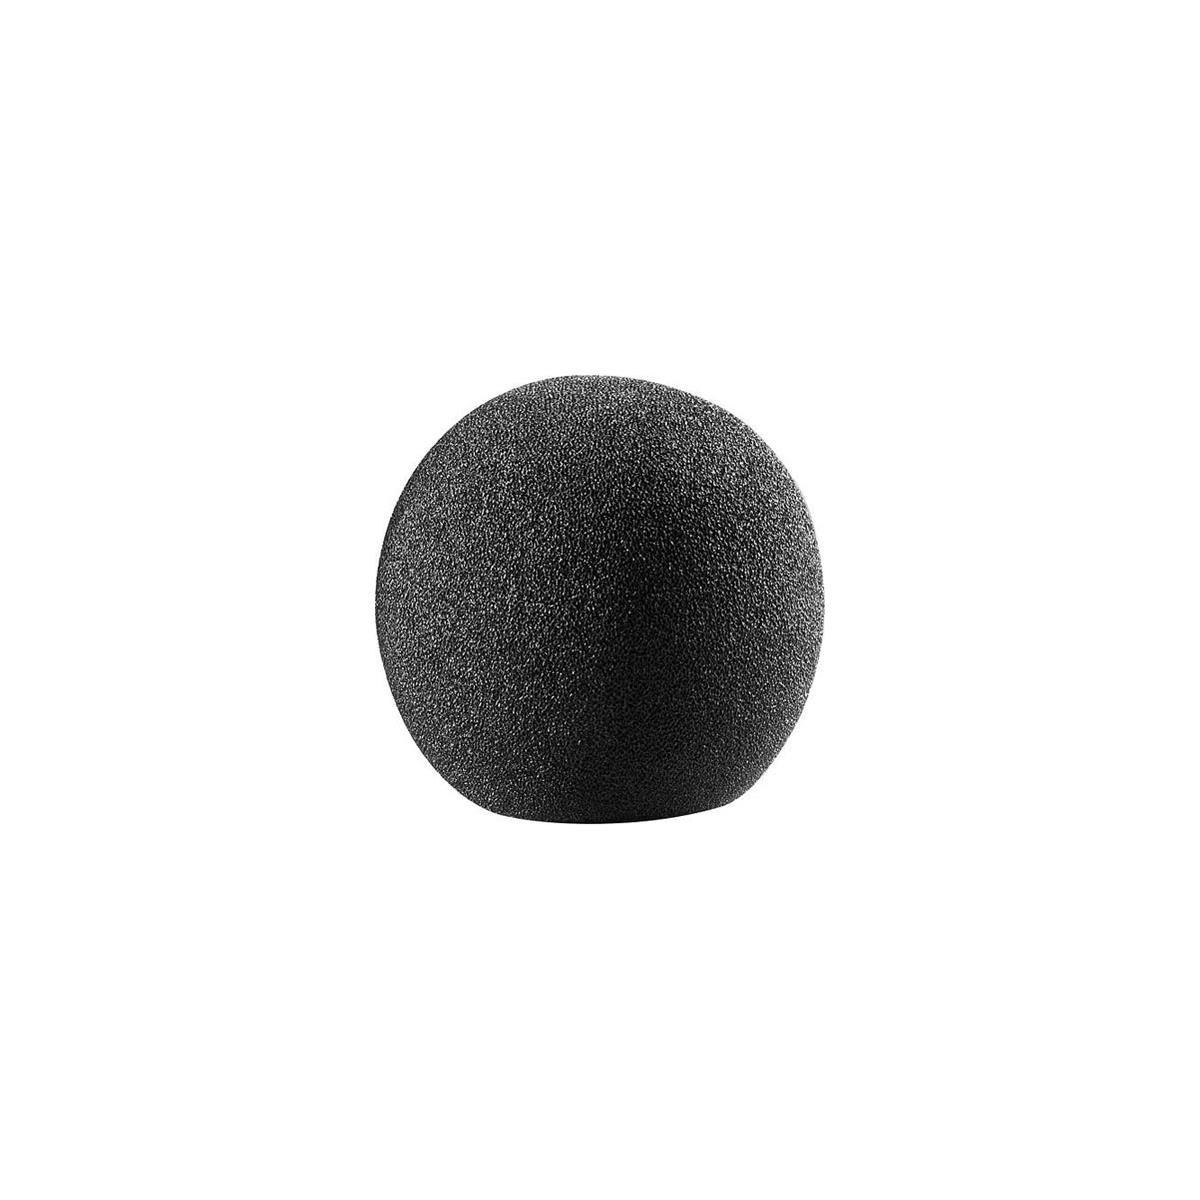 Image of Audio-Technica AT8120 Large Ball-Shaped Foam Windscreen